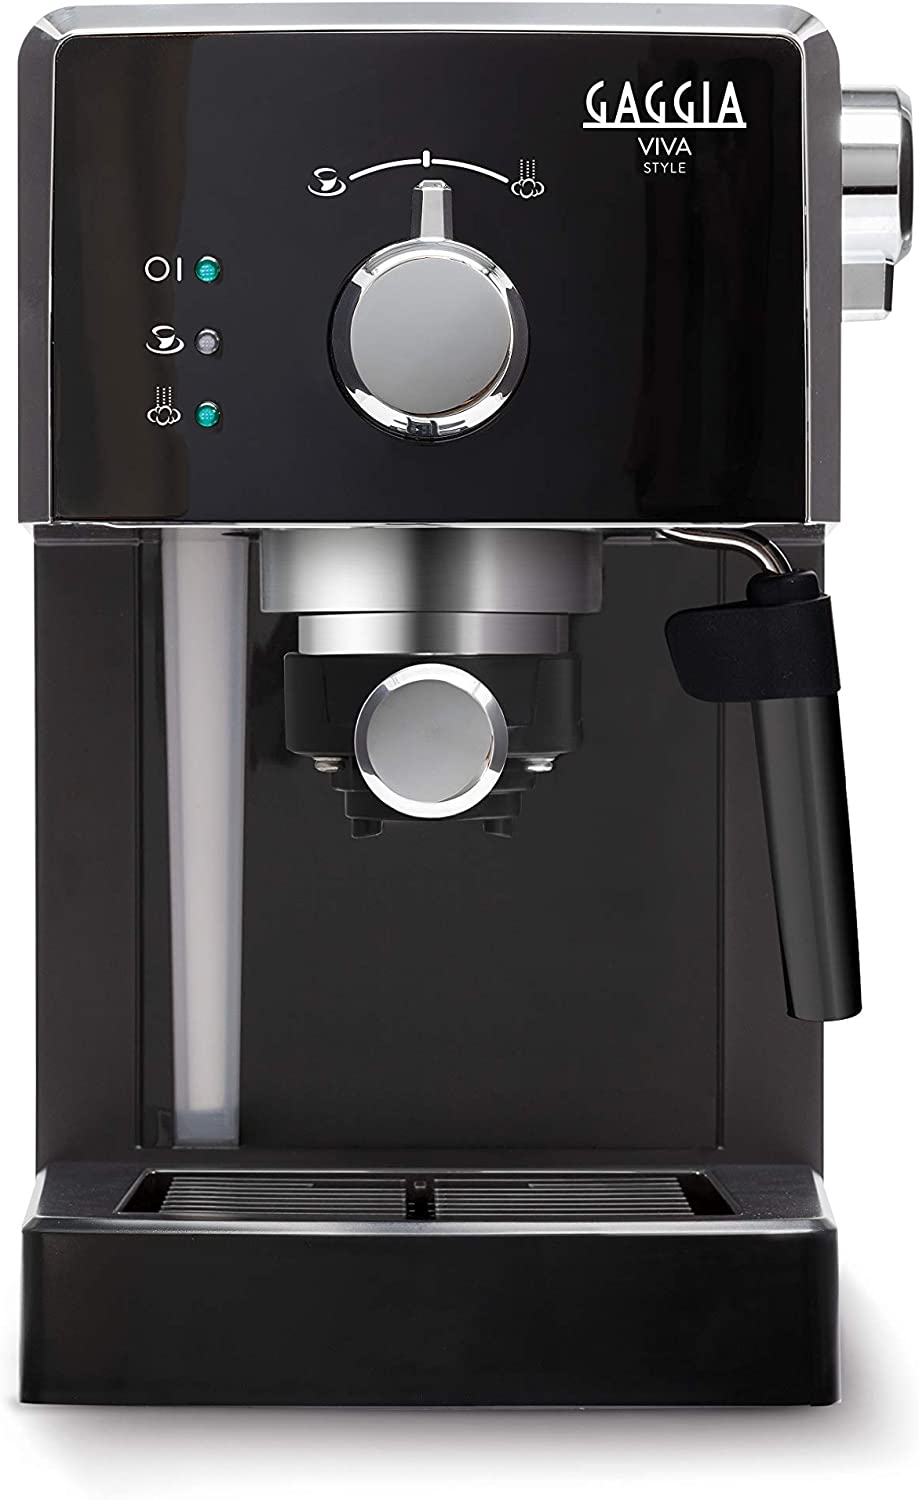 Gaggia Viva Style Coffee Machine